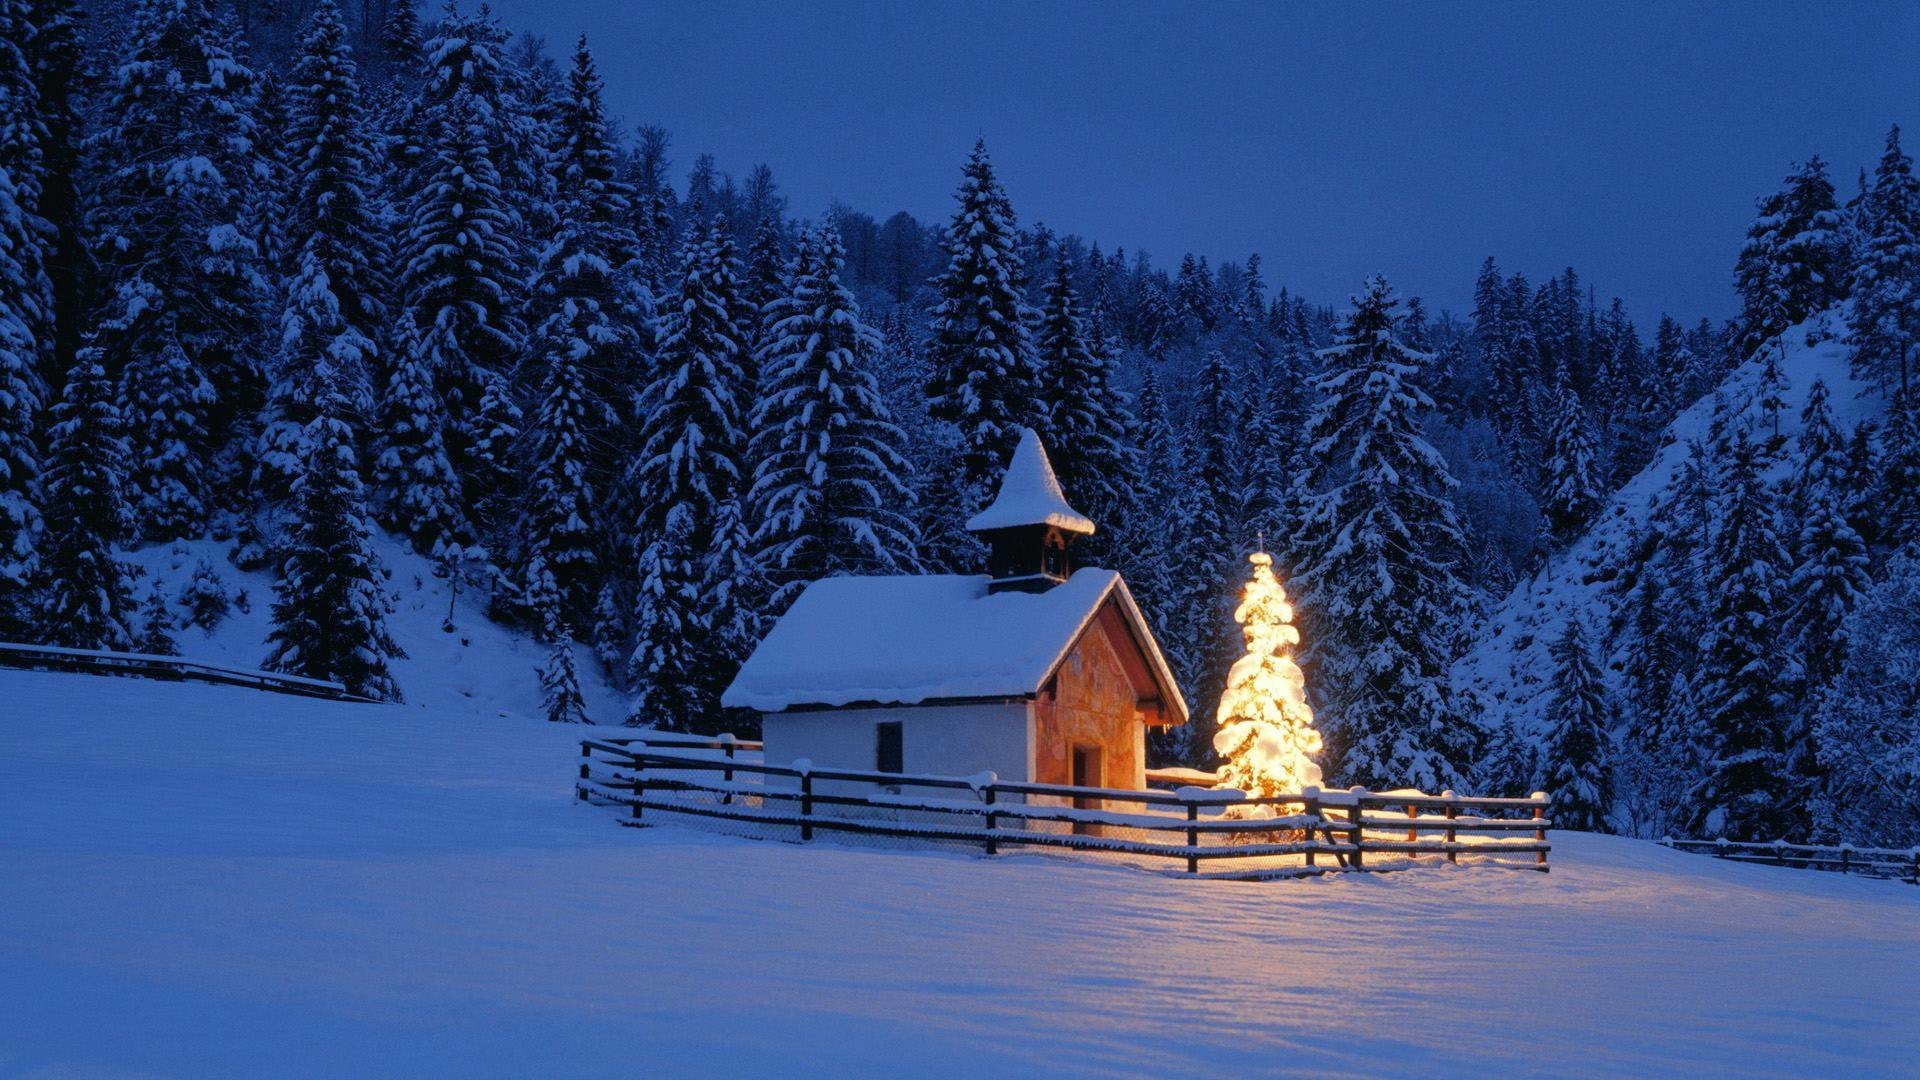 1920x1080 Wallpaper Snow Nature Winter House Beautiful Romantic Christmas Tree